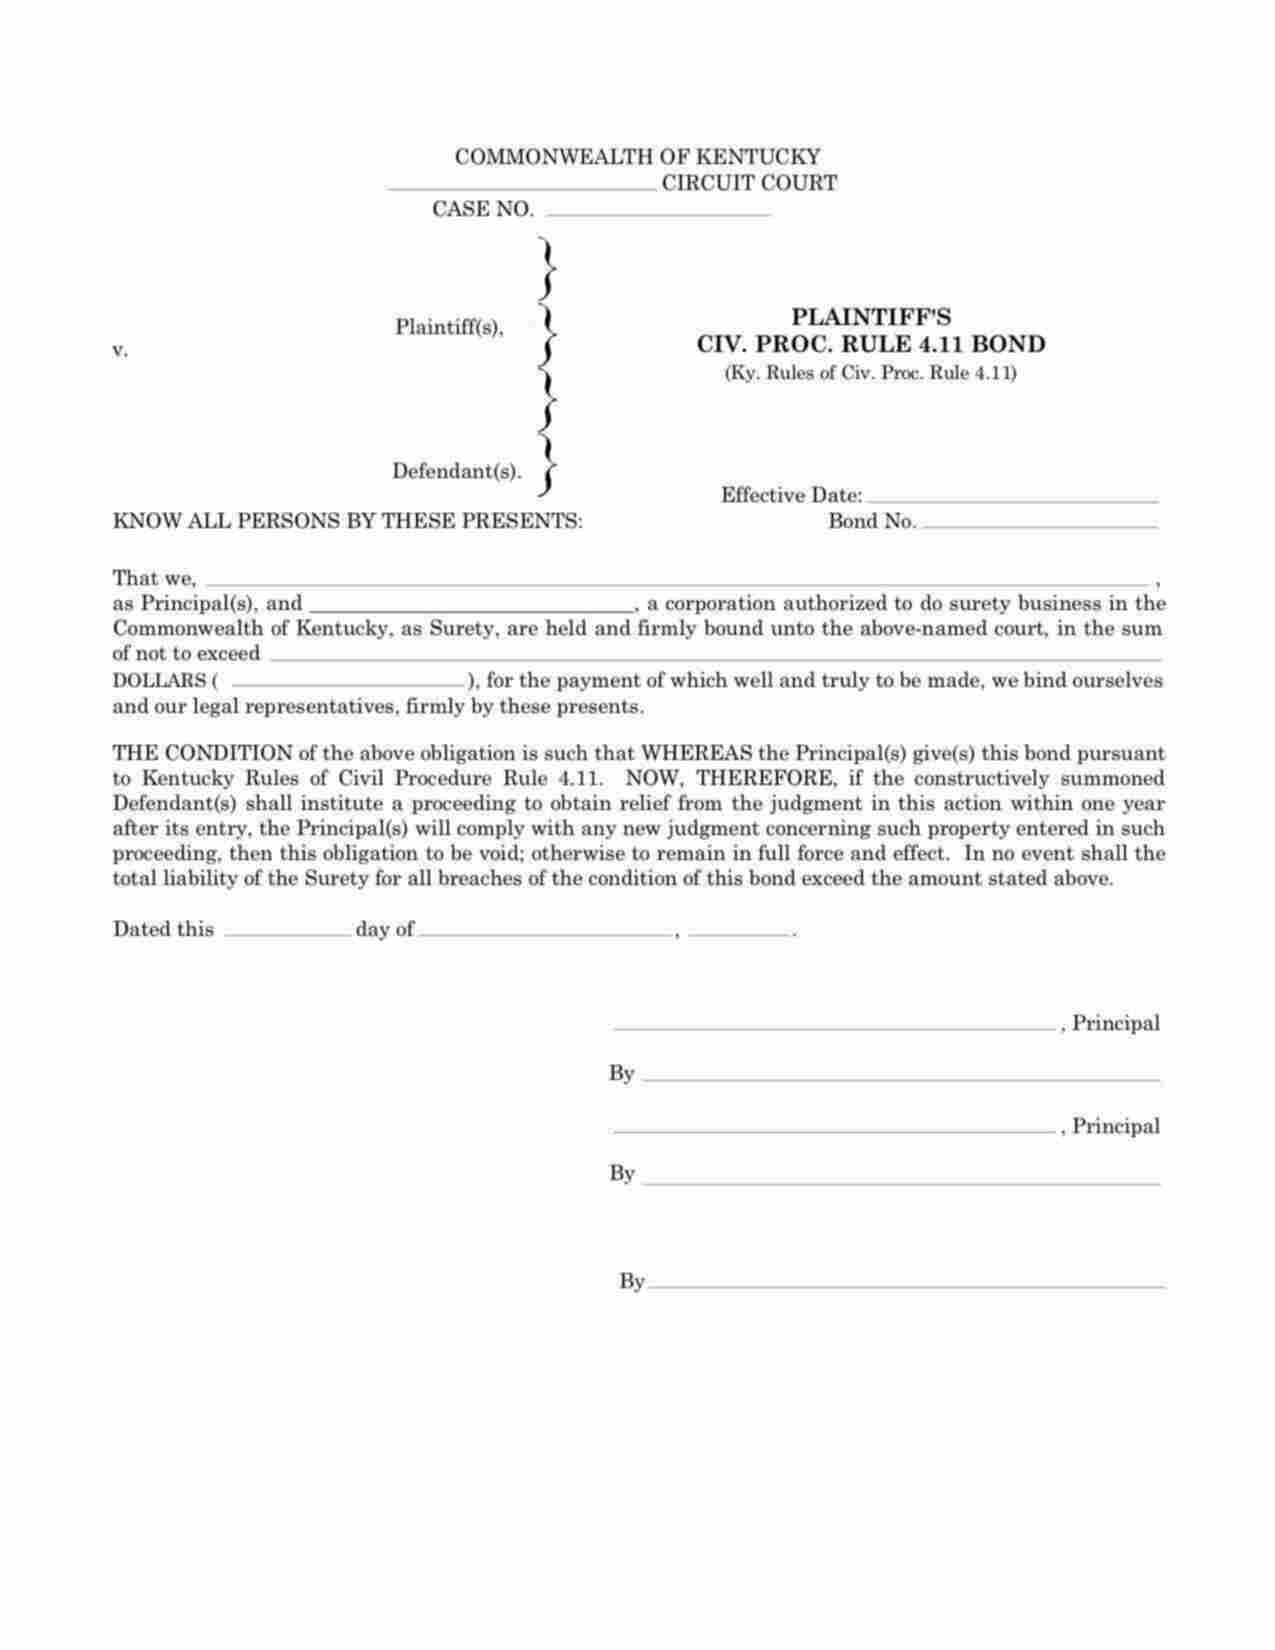 Kentucky Plaintiffs Civil Procedure Rule 4.11 Bond Form